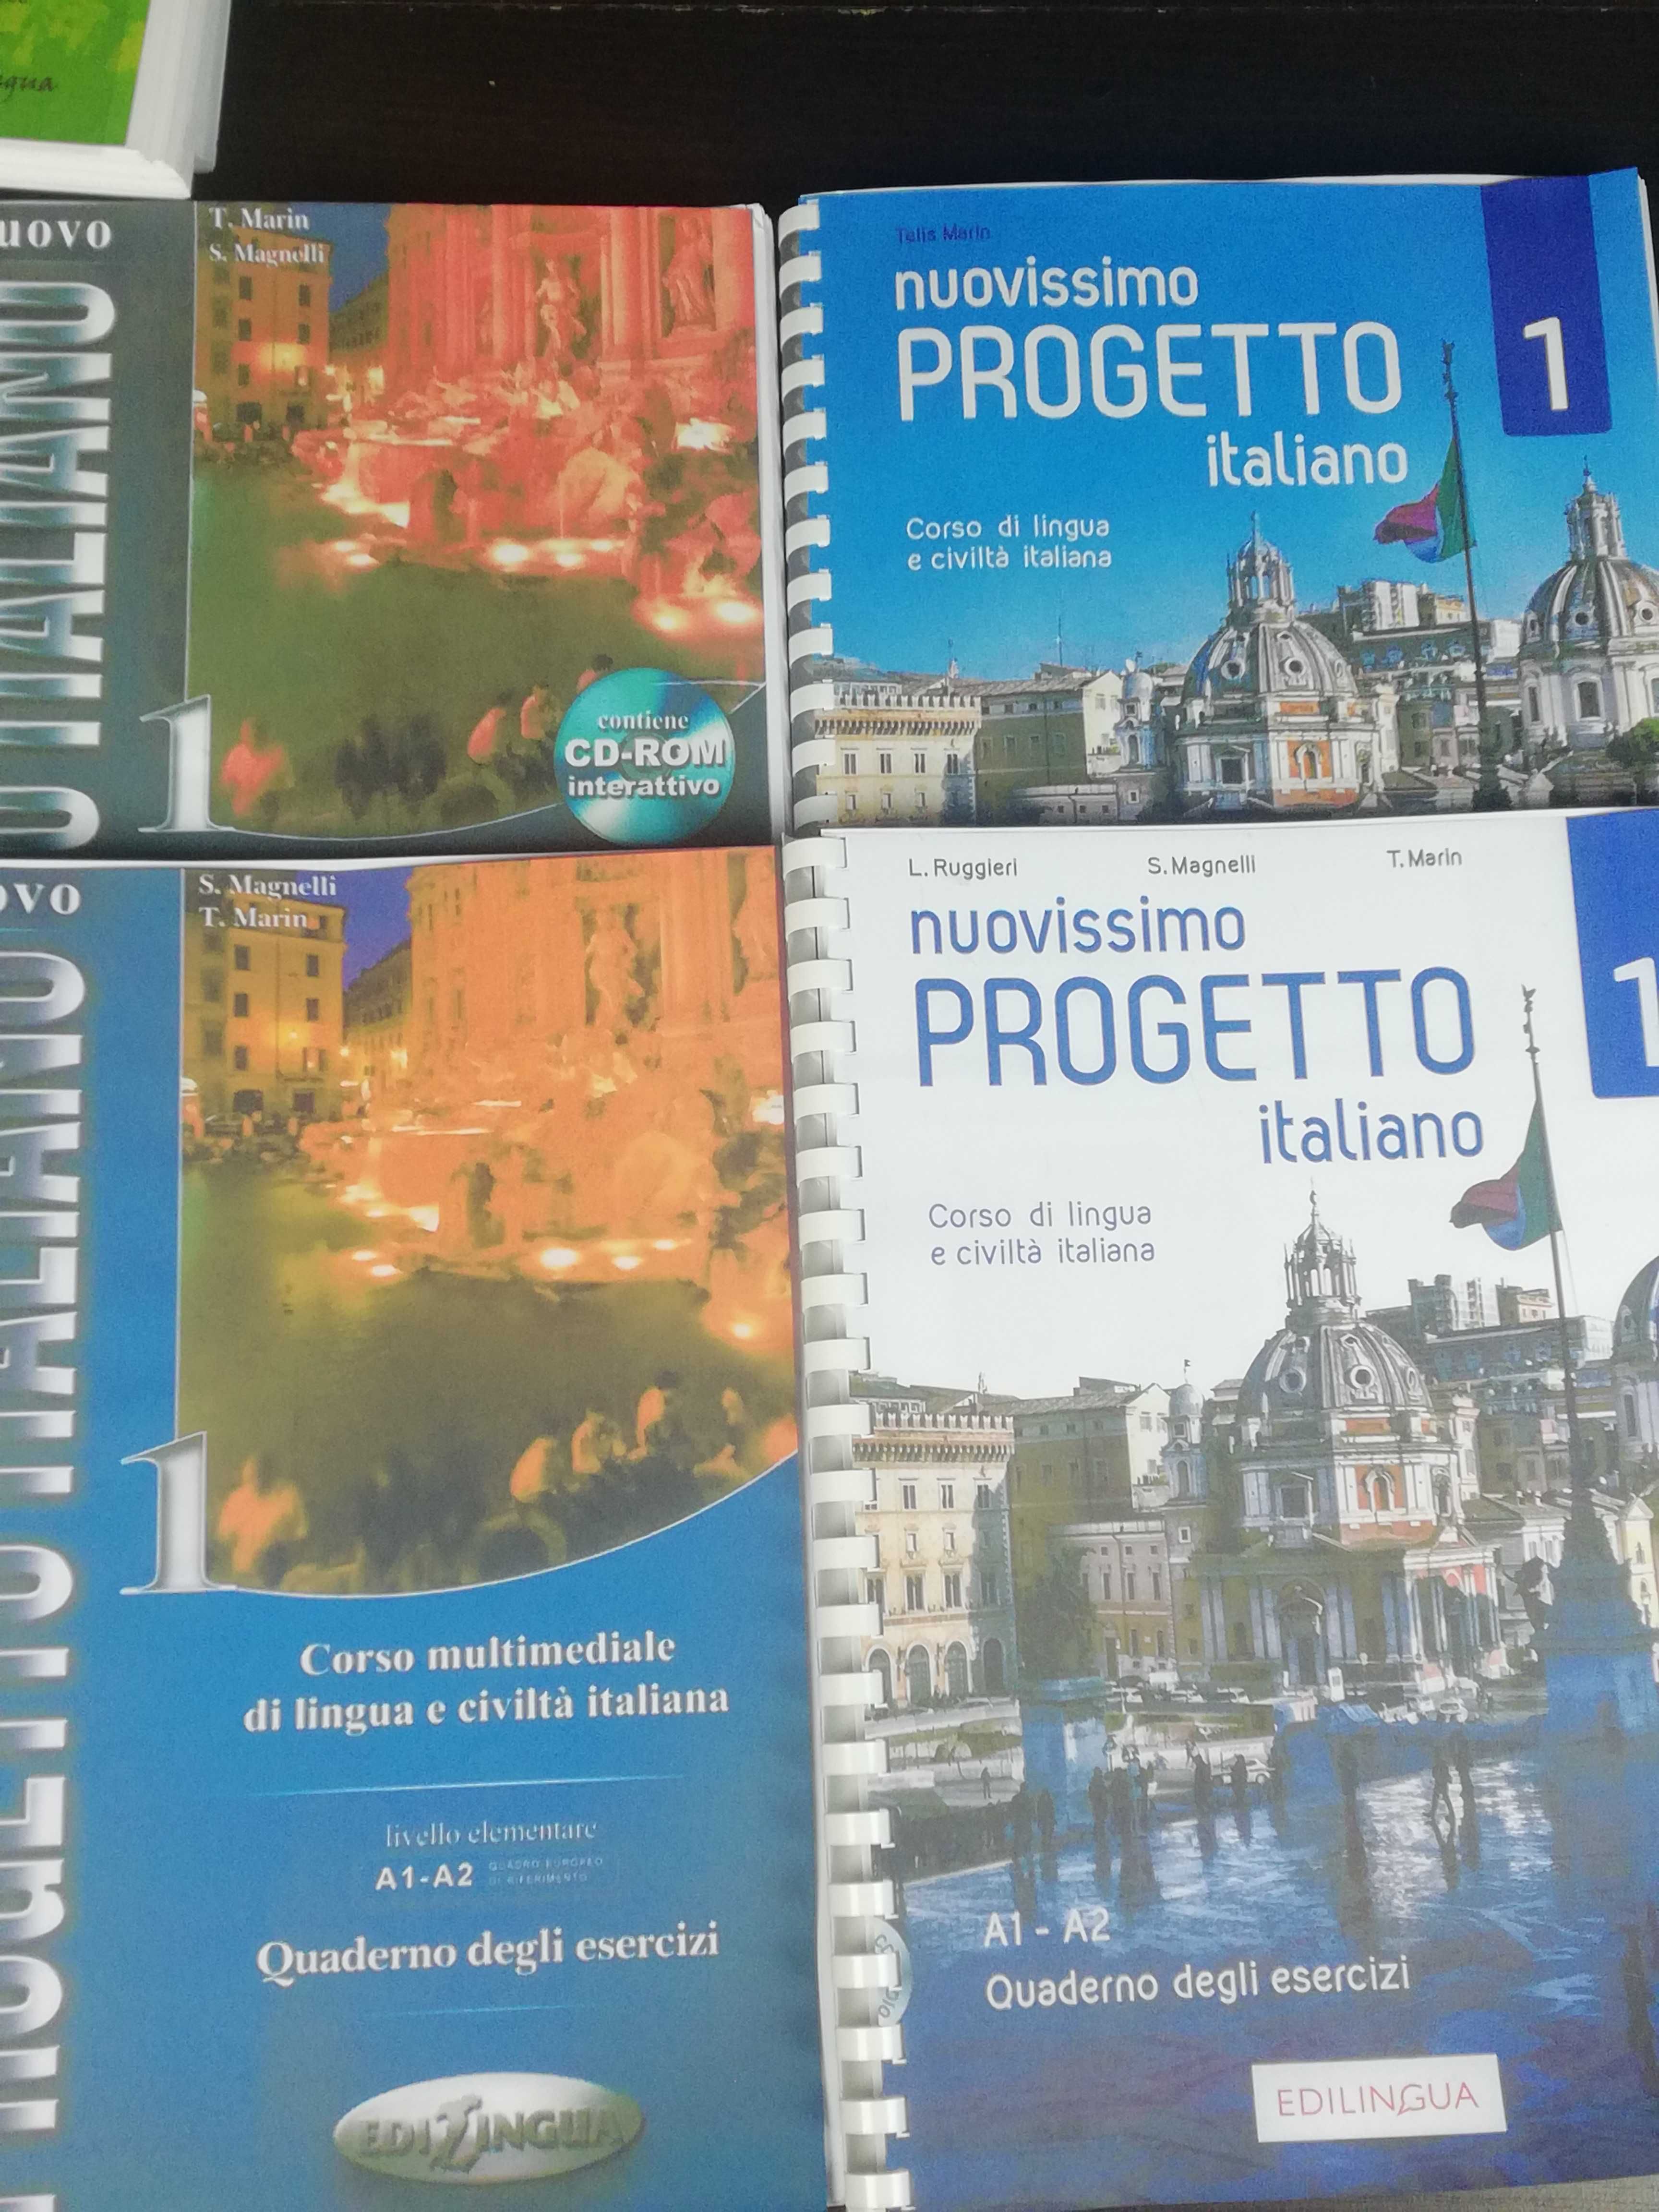 італійська мова підручник Nuovo Nuovissimo Progetto Italiano Junior